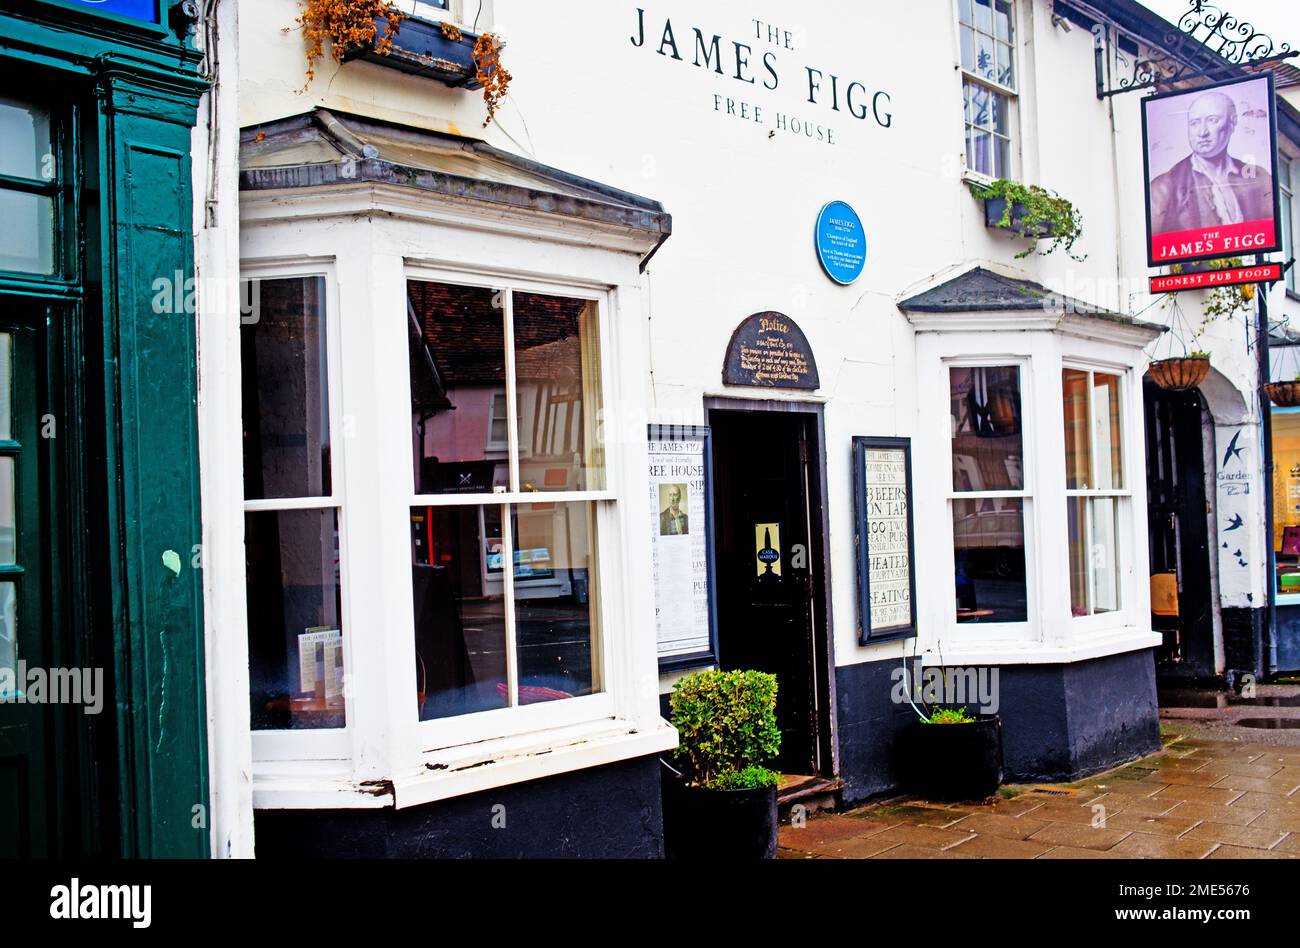 The James Figg Pub, High Street, Thame, Oxfordshire, Inghilterra Foto Stock